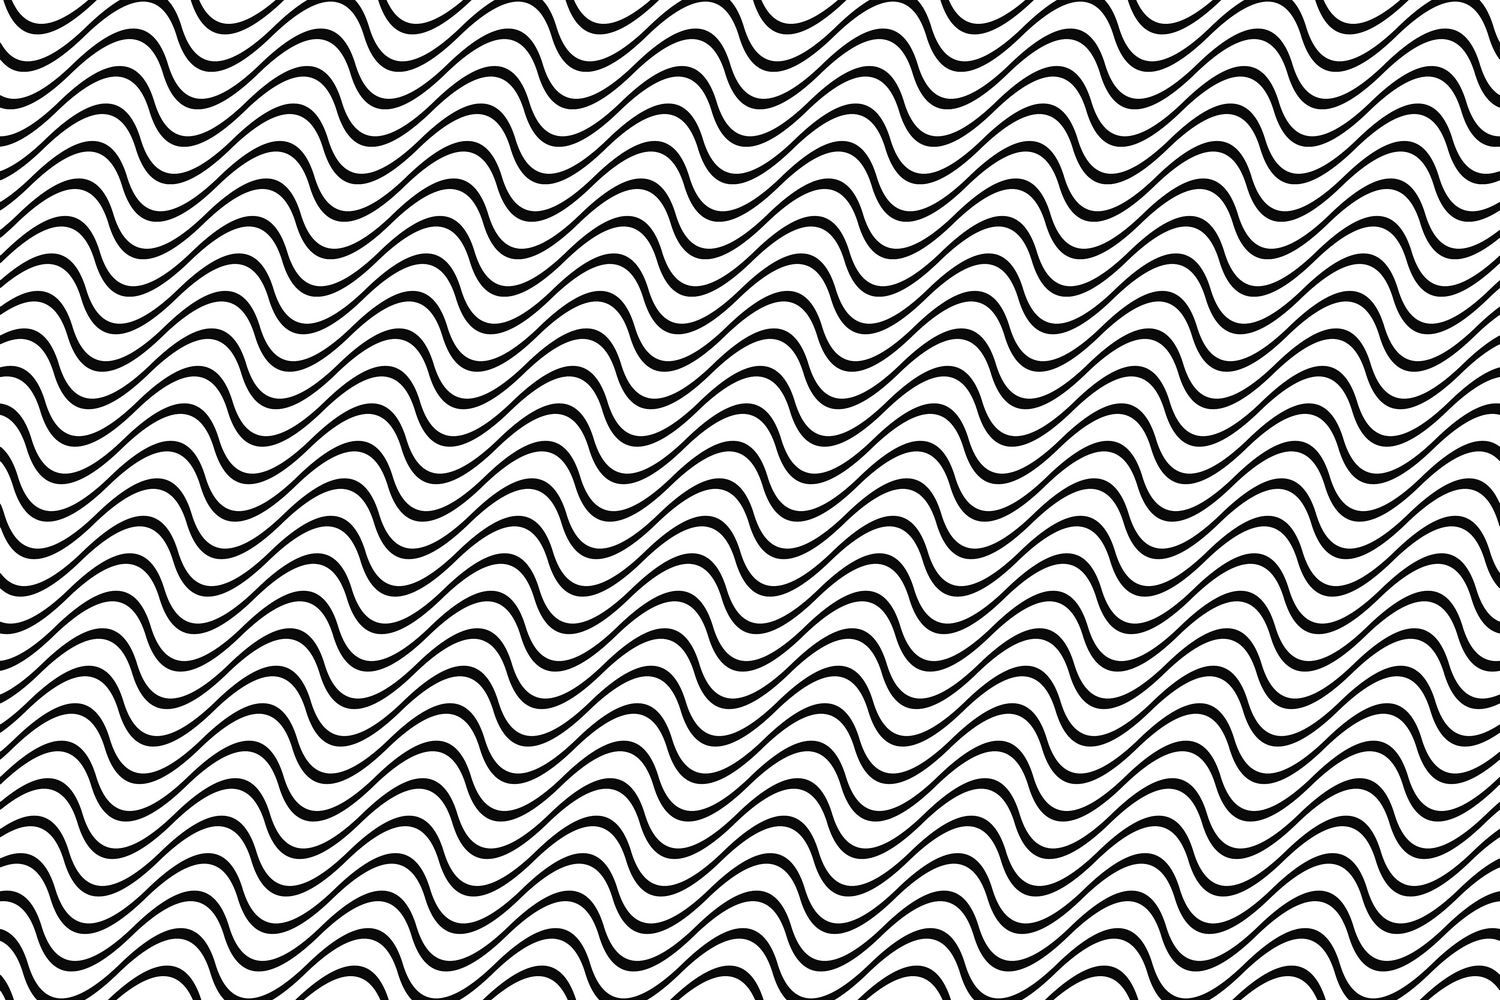 Download 15 seamless wave line patterns (EPS, AI | Design Bundles